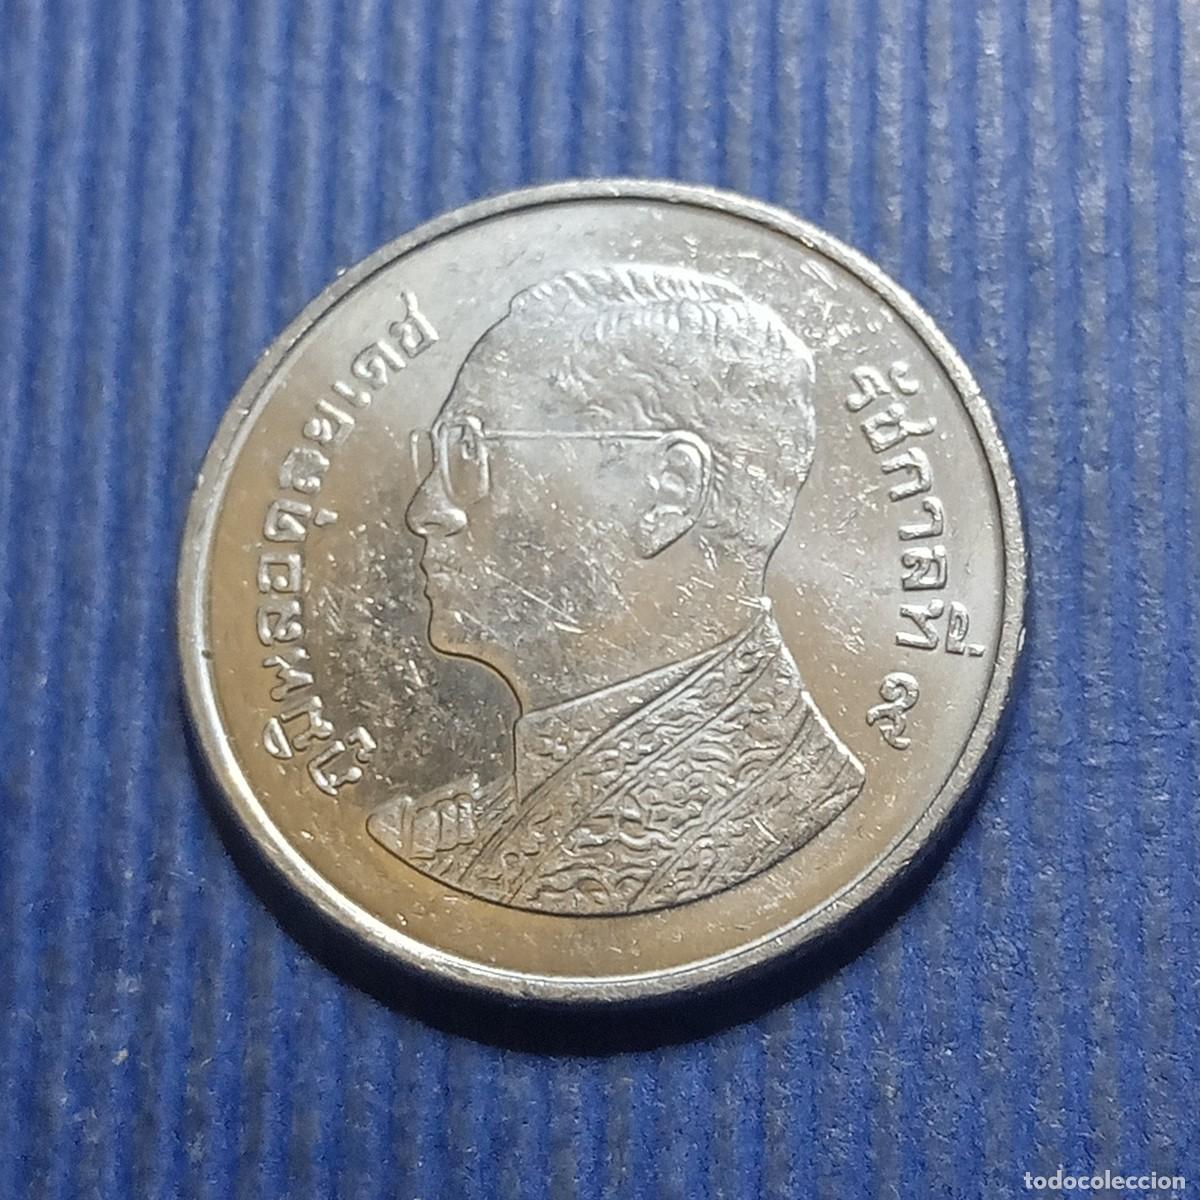 moneda 1 urn